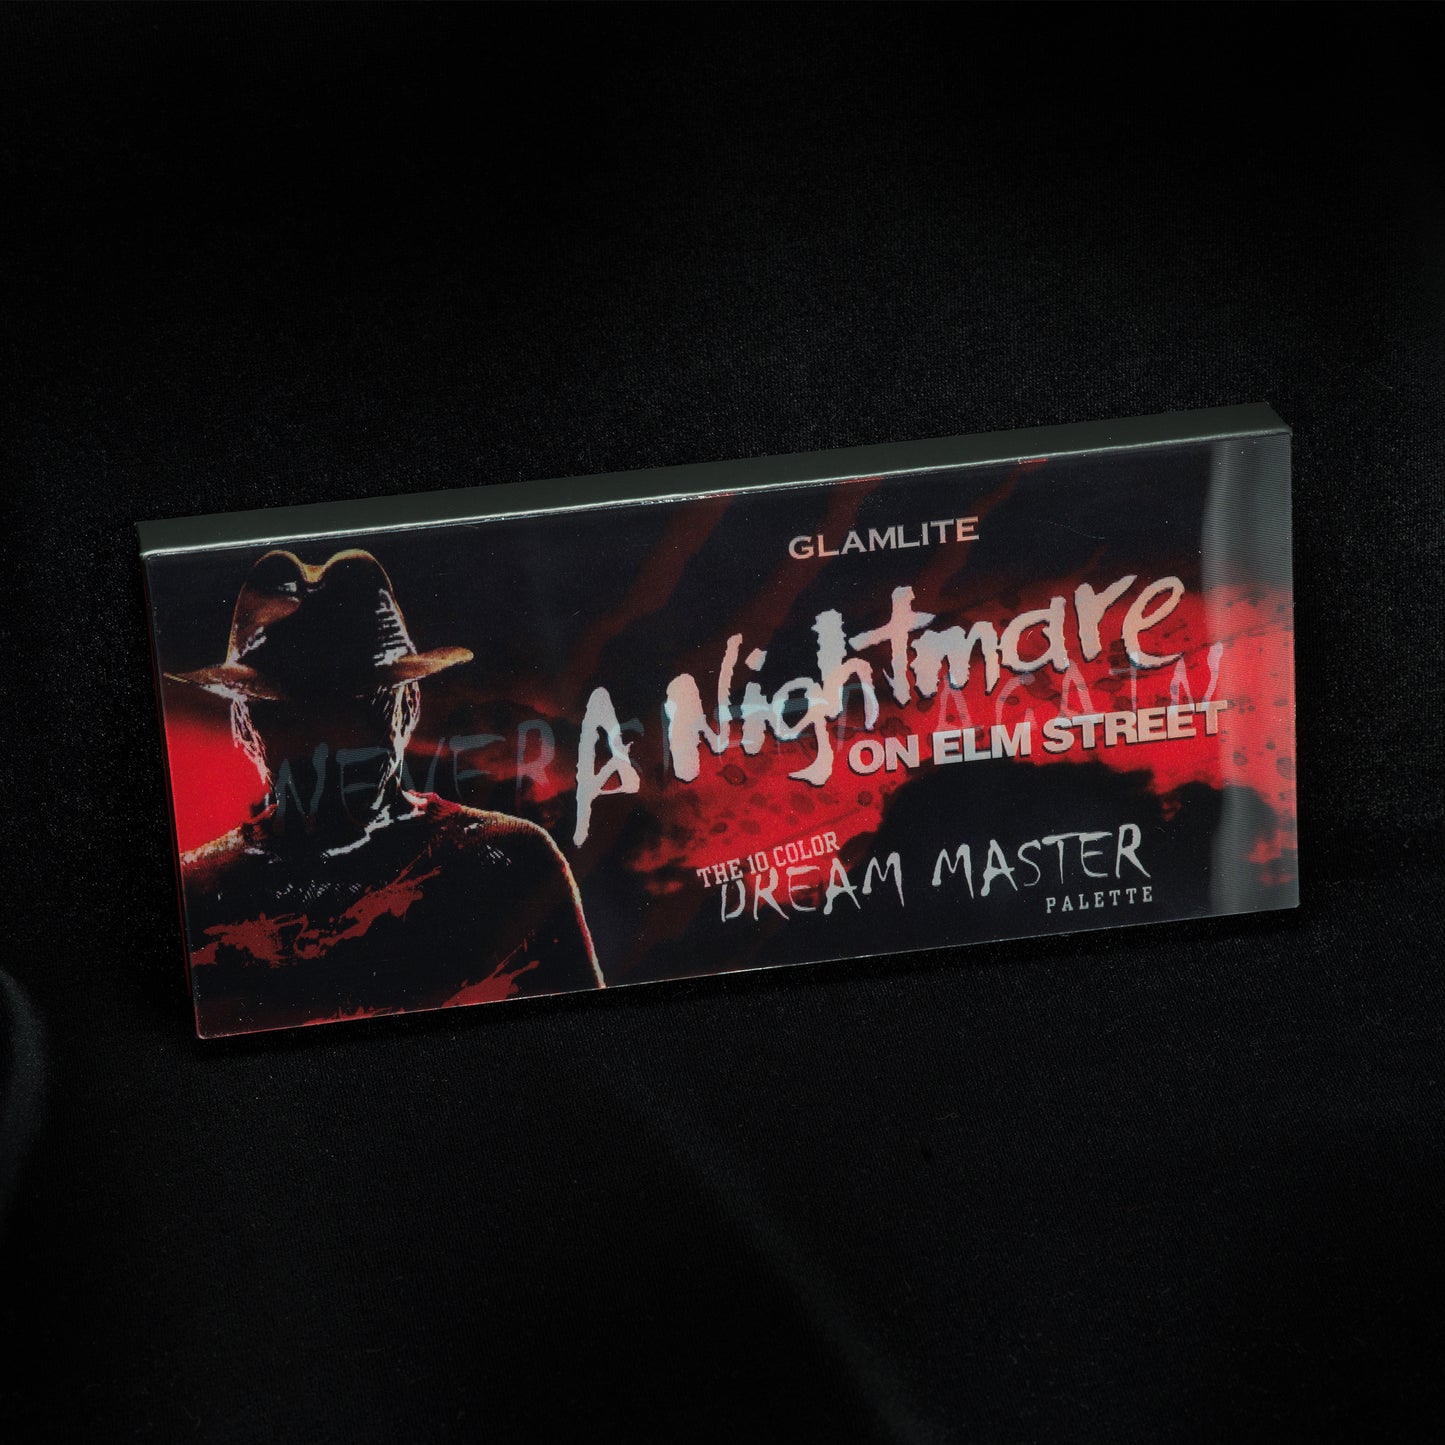 Nightmare on Elm street Dream Master eyeshadow palette cover by Glamlite